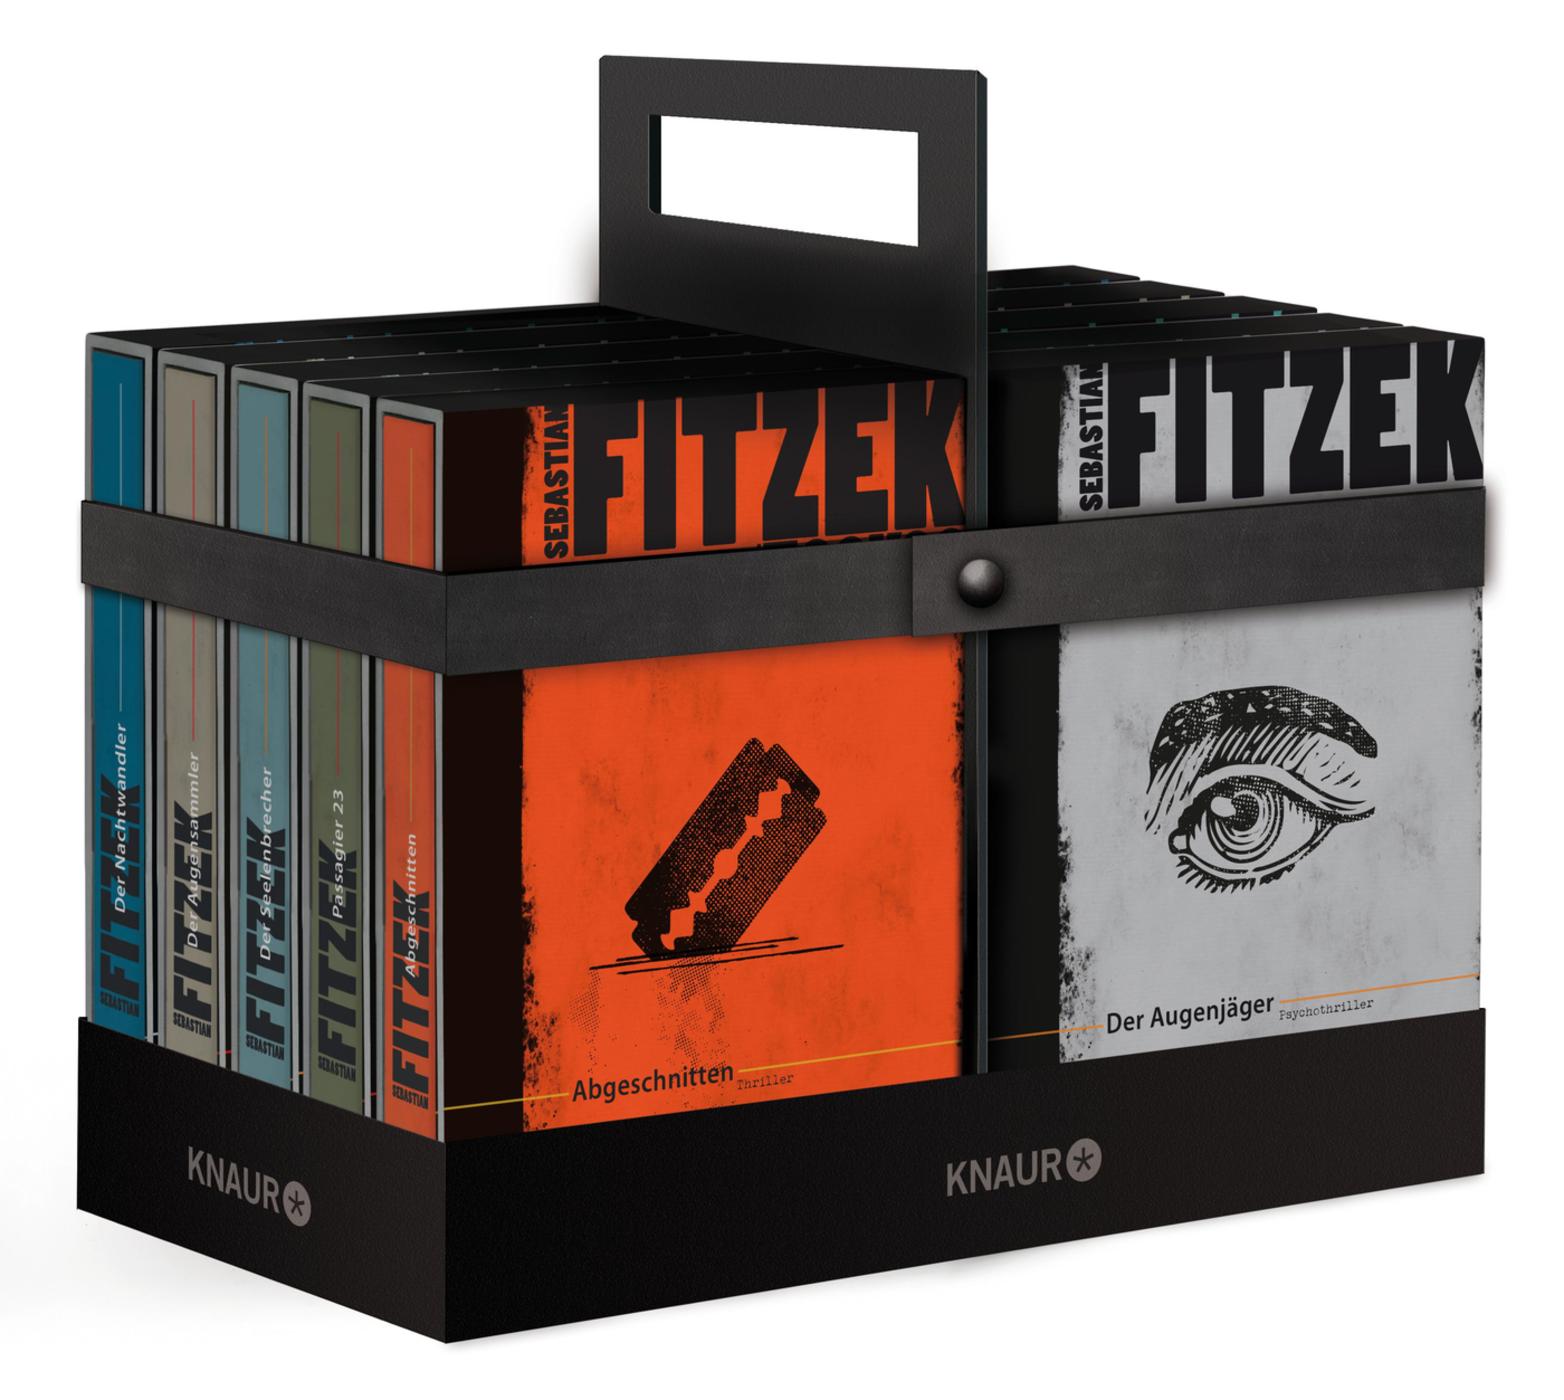 Fitzek-Box, 10 Bände | Sebastian Fitzek |  9783426519301 - Photo 1/1